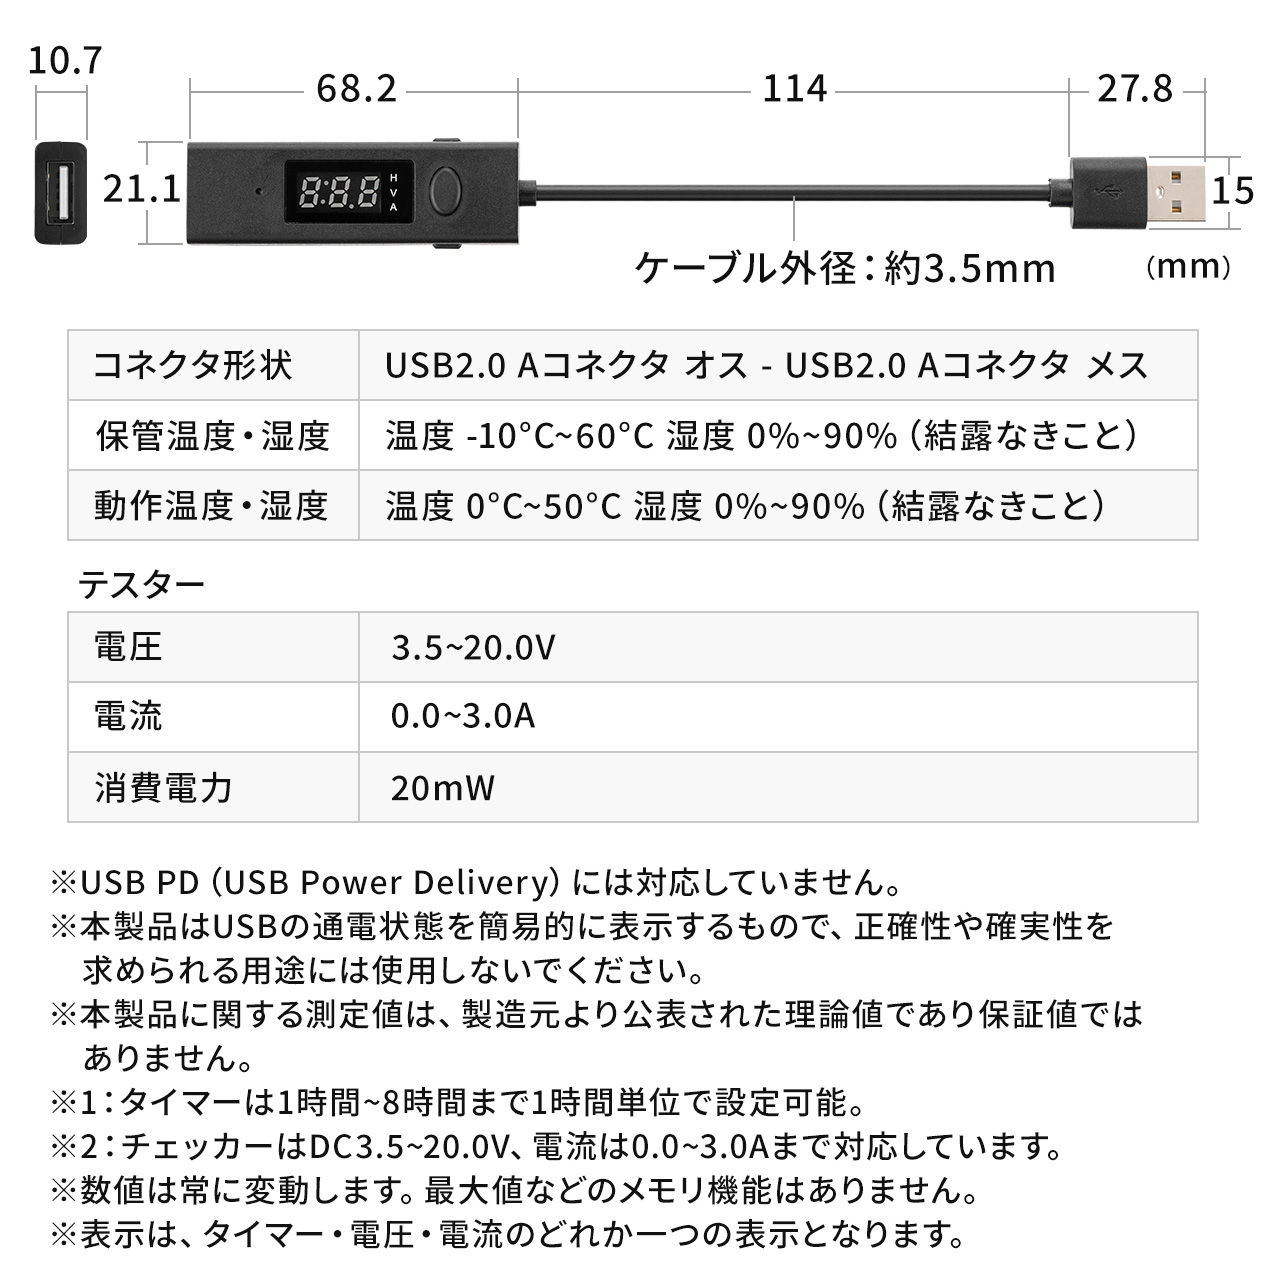 USBタイマーケーブル Type-A USB2.0 電流測定 充電 データ転送 3A対応 ブラック 500-USB057